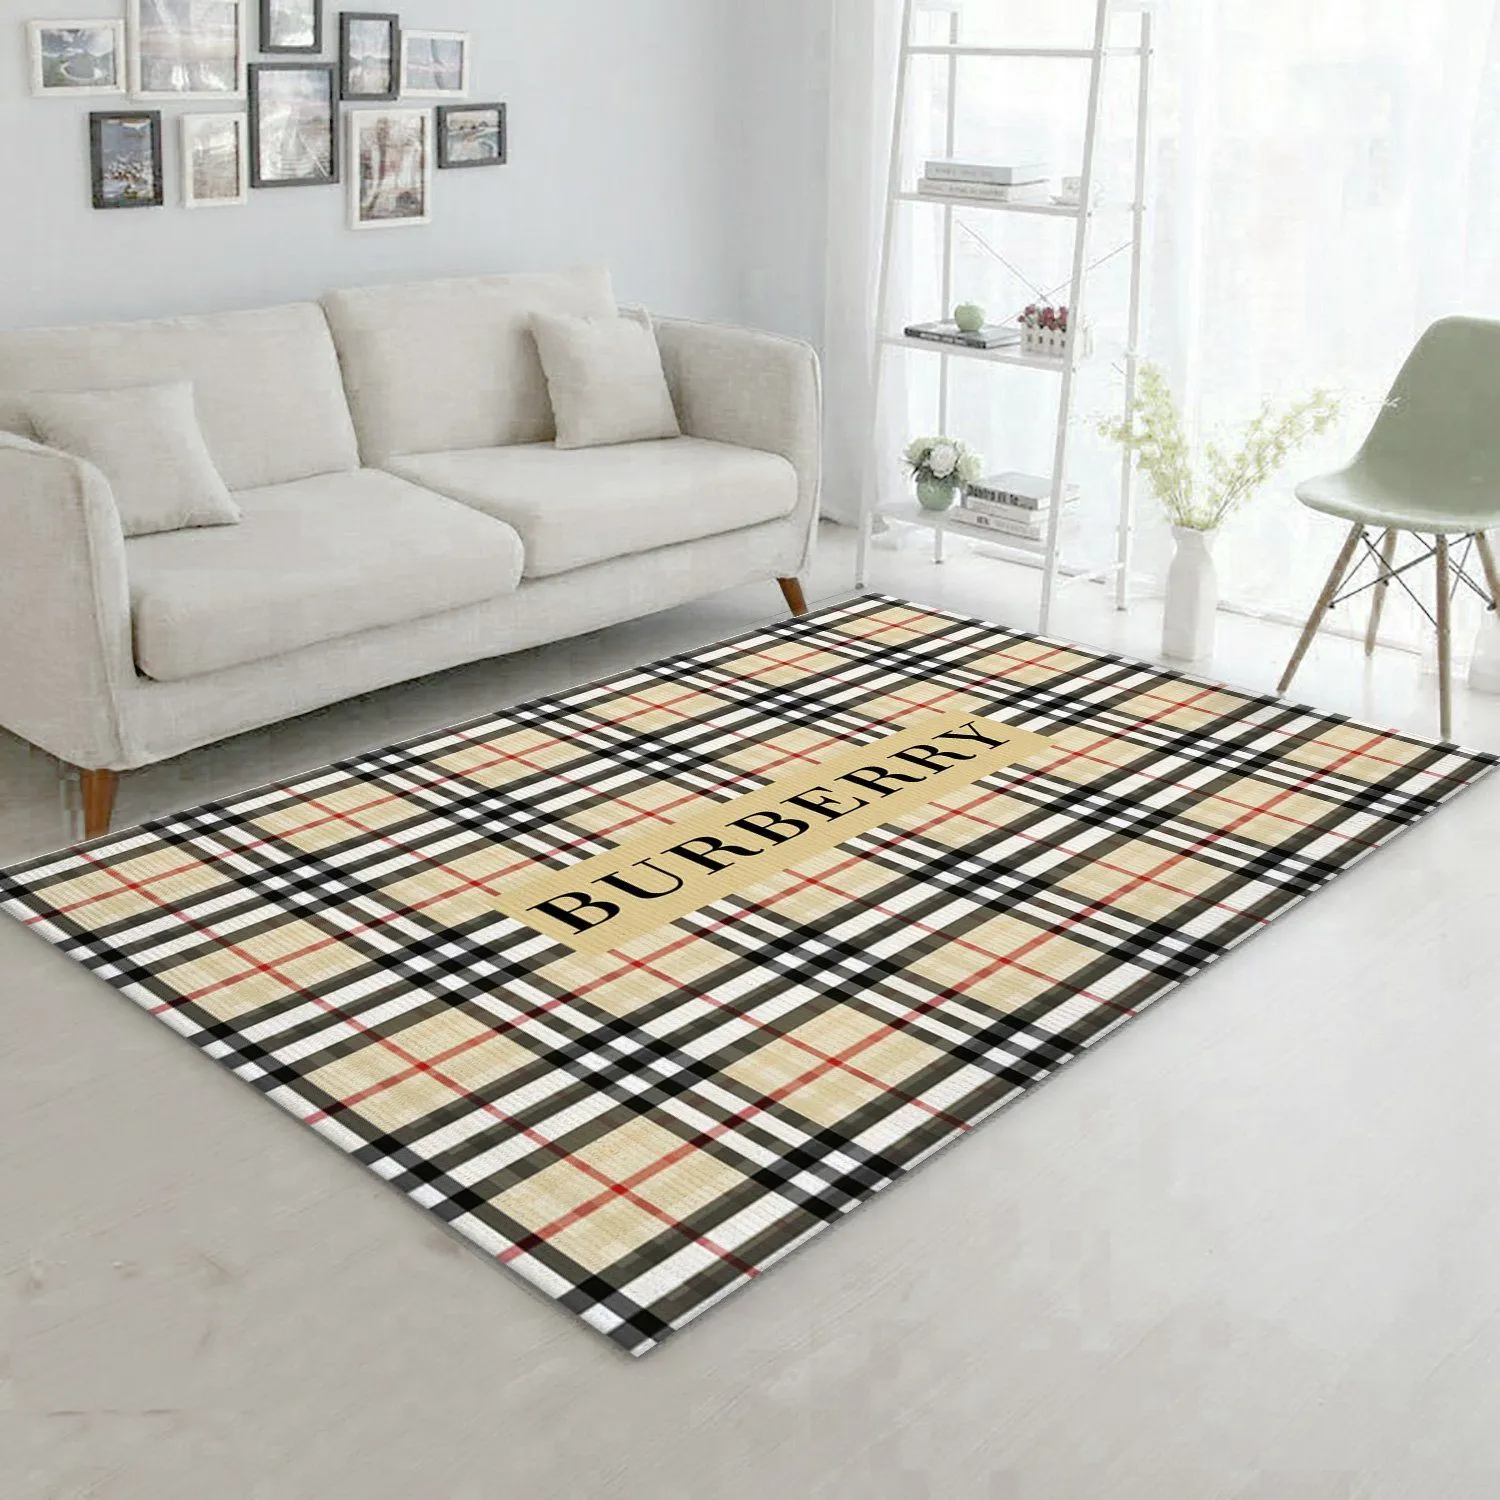 Burberry Rectangle Rug Fashion Brand Home Decor Area Carpet Door Mat Luxury